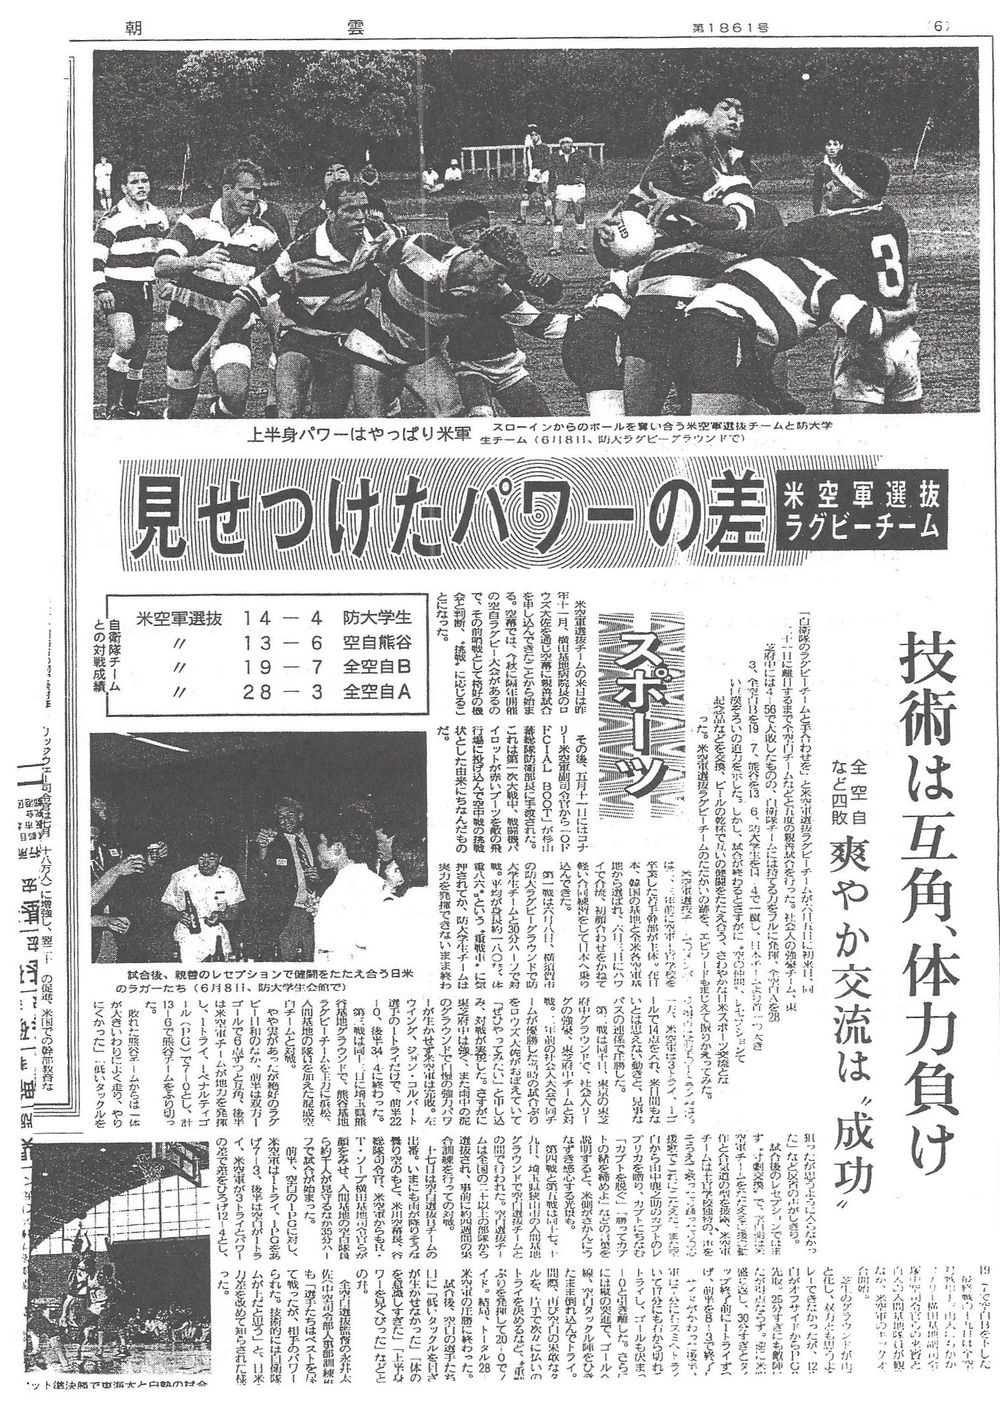 1989 Japan tour summary report 12.jpg